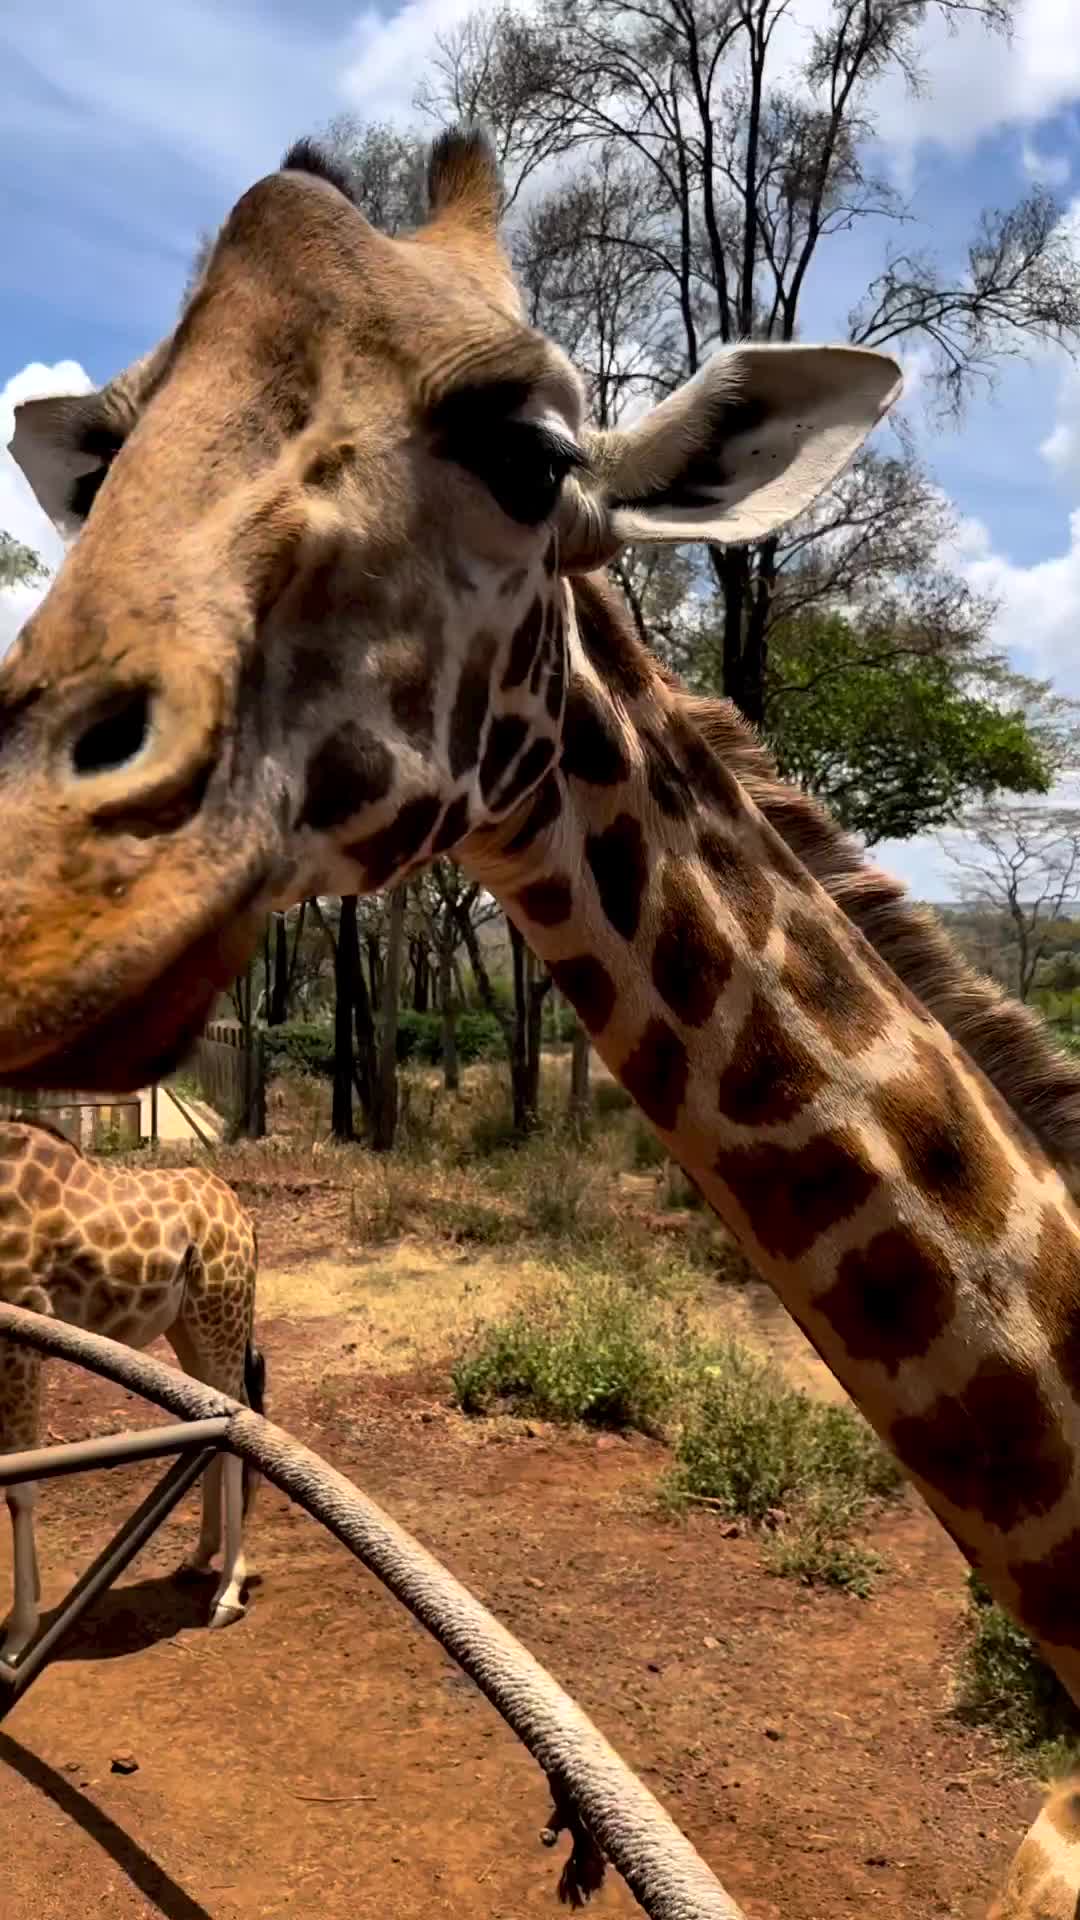 Discover Kenya's Wildlife at Nairobi's Giraffe Centre